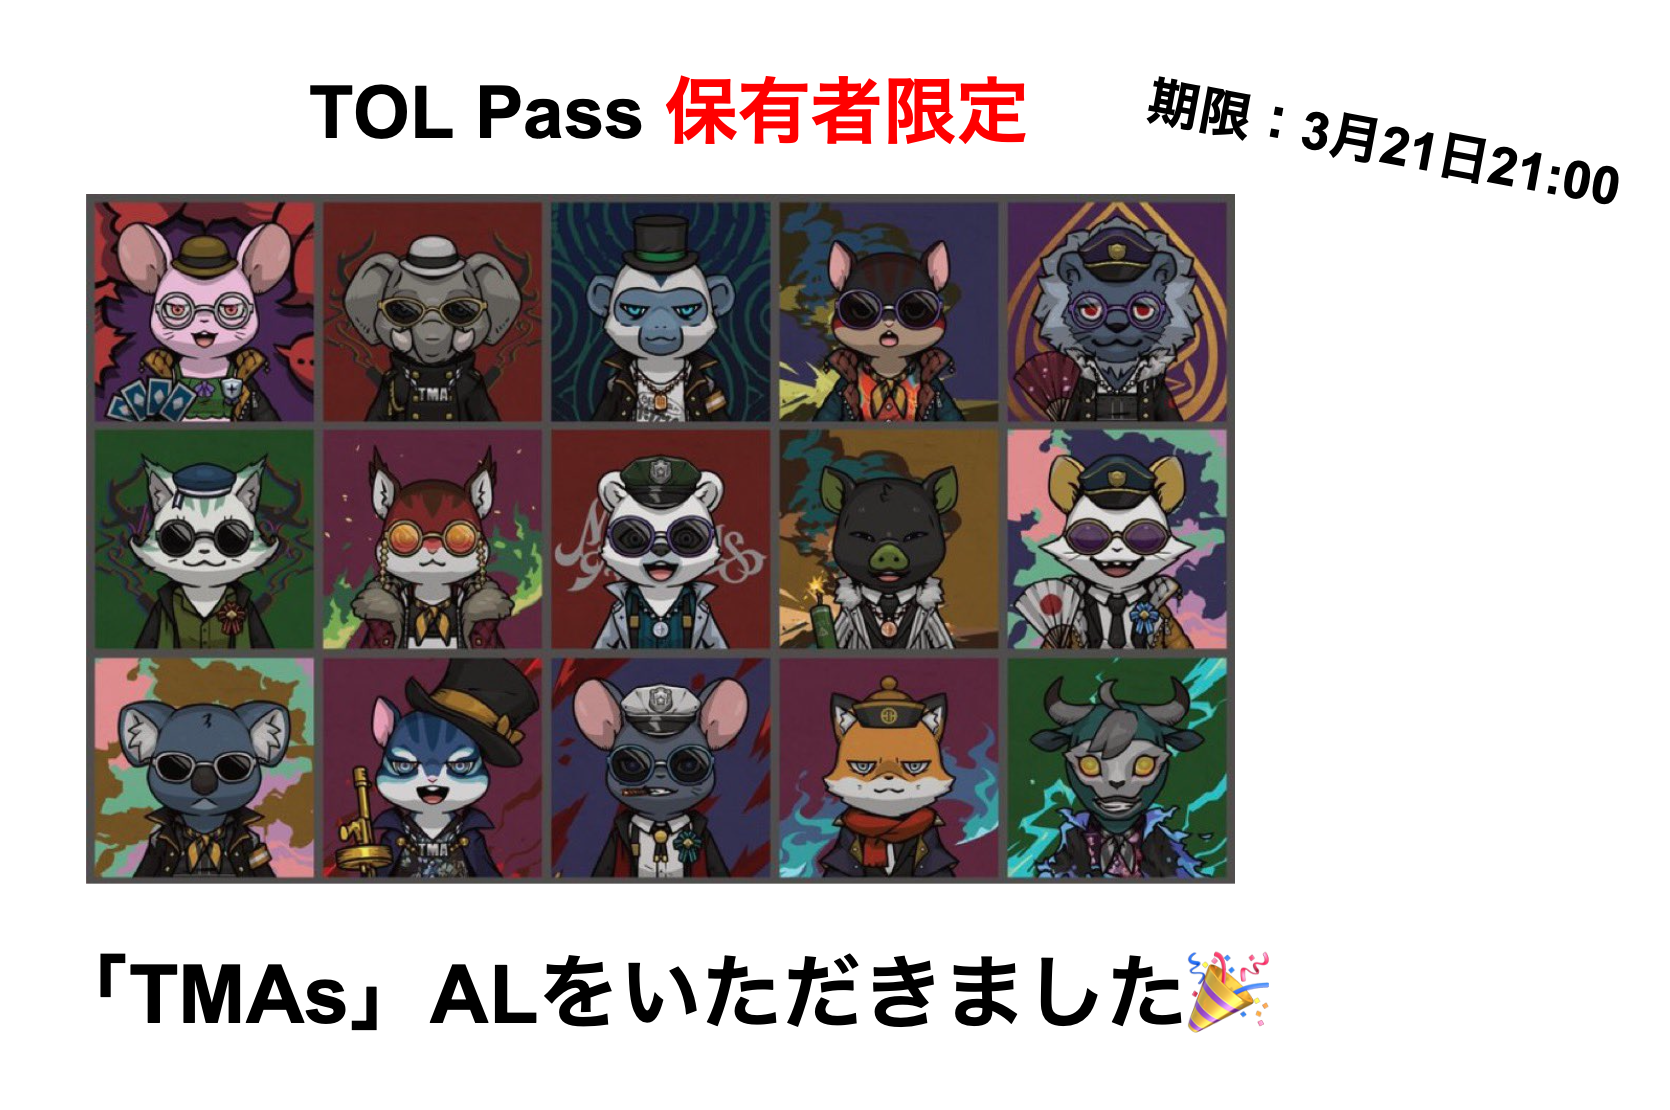 TOL Pass mintsite